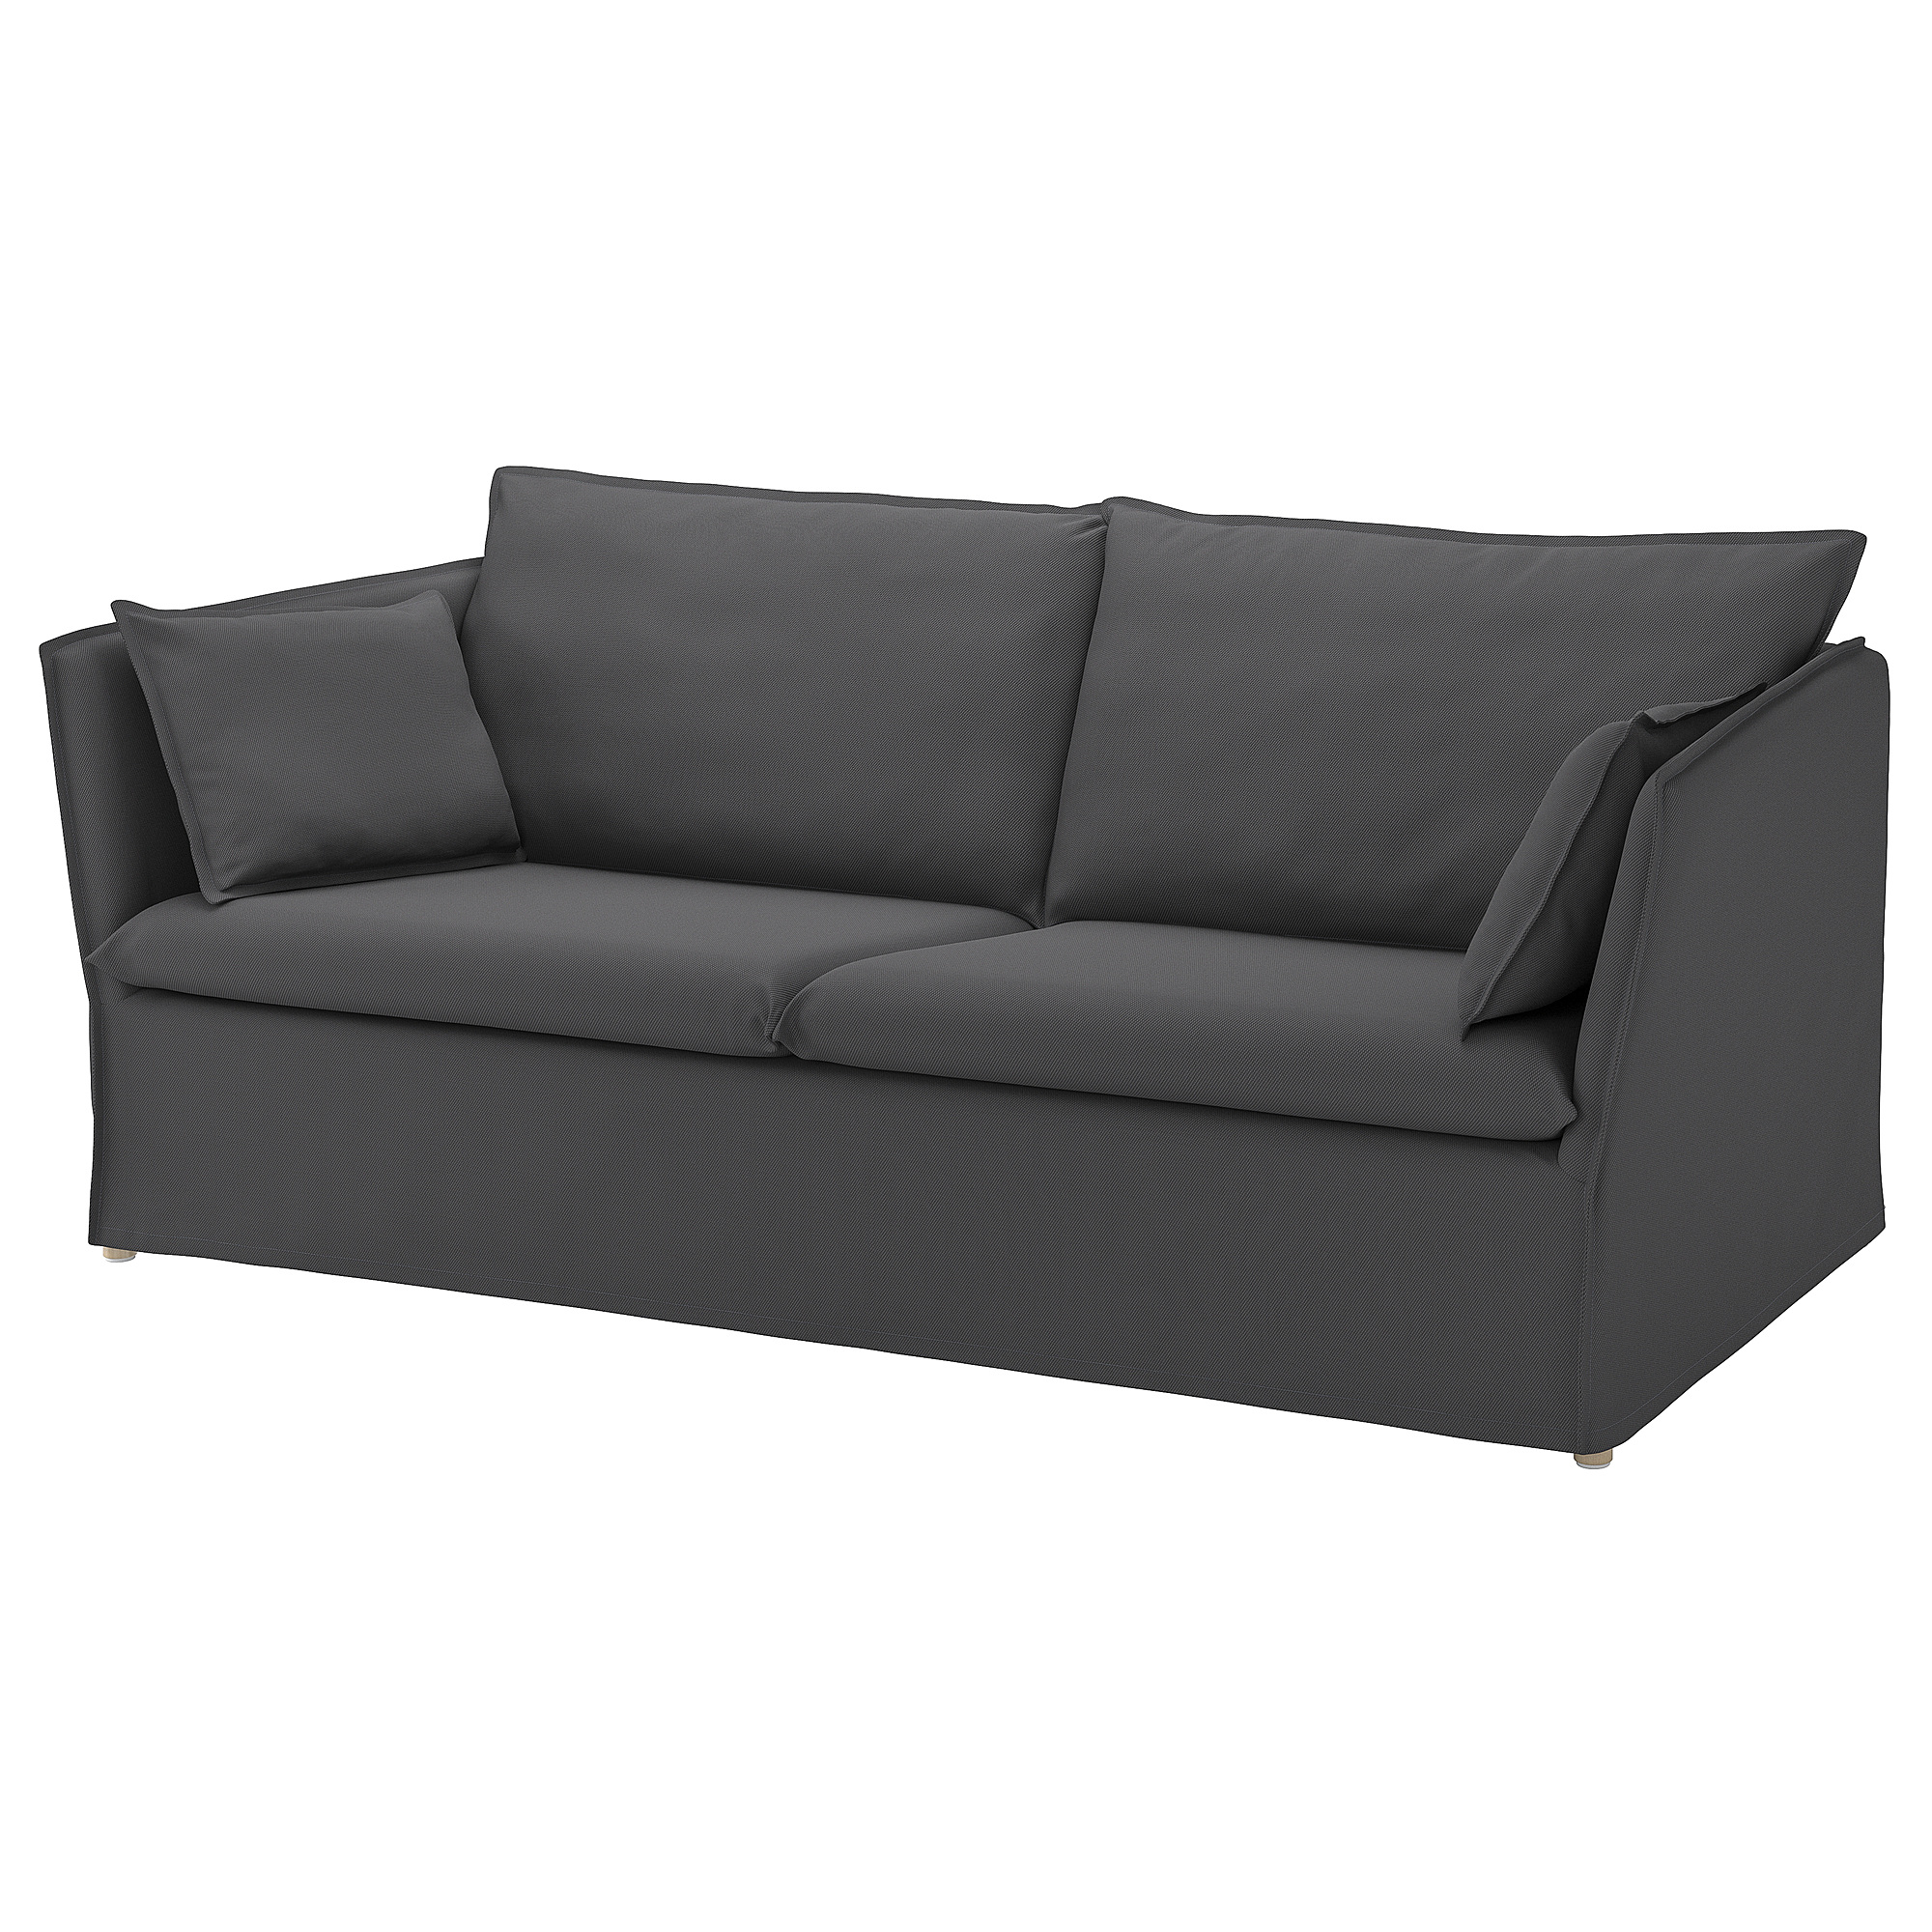 BACKSÄLEN cover for 3-seat sofa